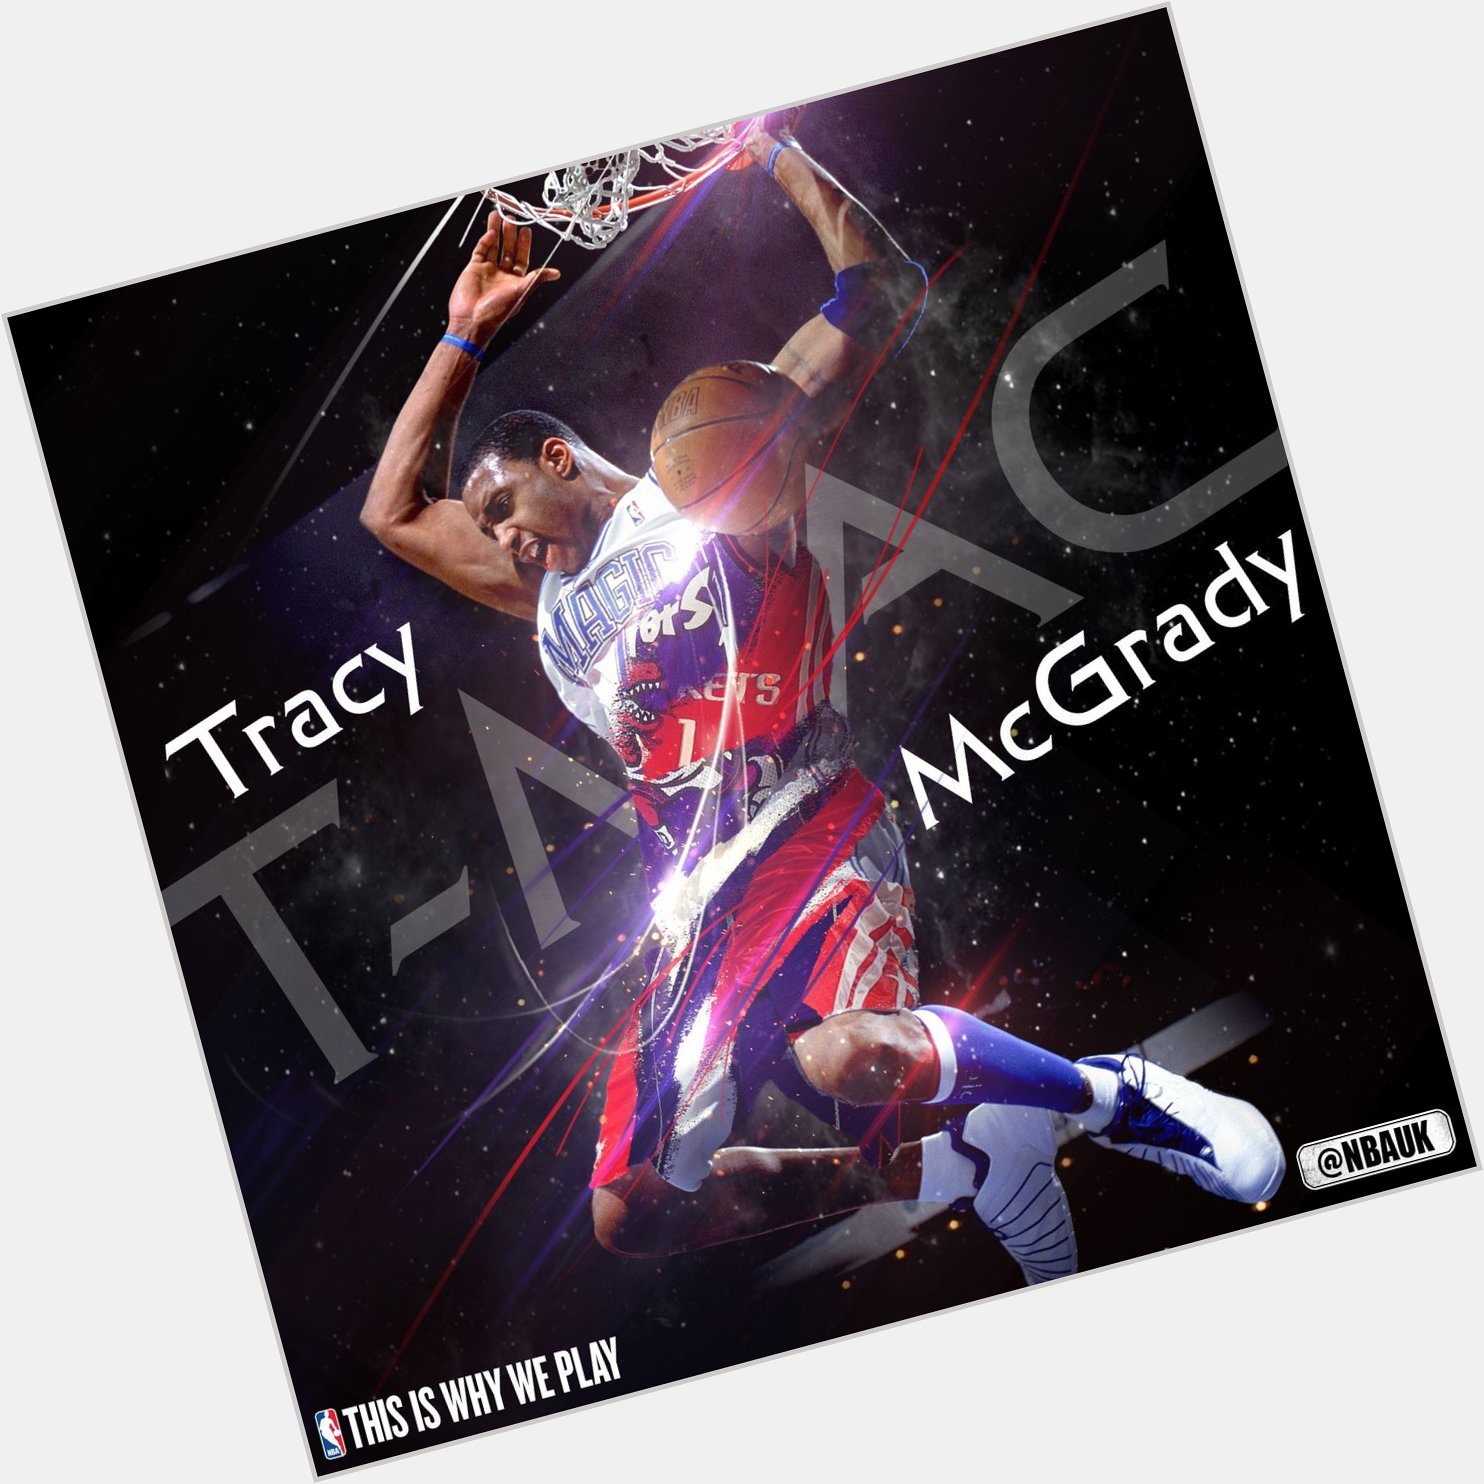   Join us as we wish 2x NBA Scoring Champion & 7x NBA All-Star, Tracy McGrady a very happy birthday! 